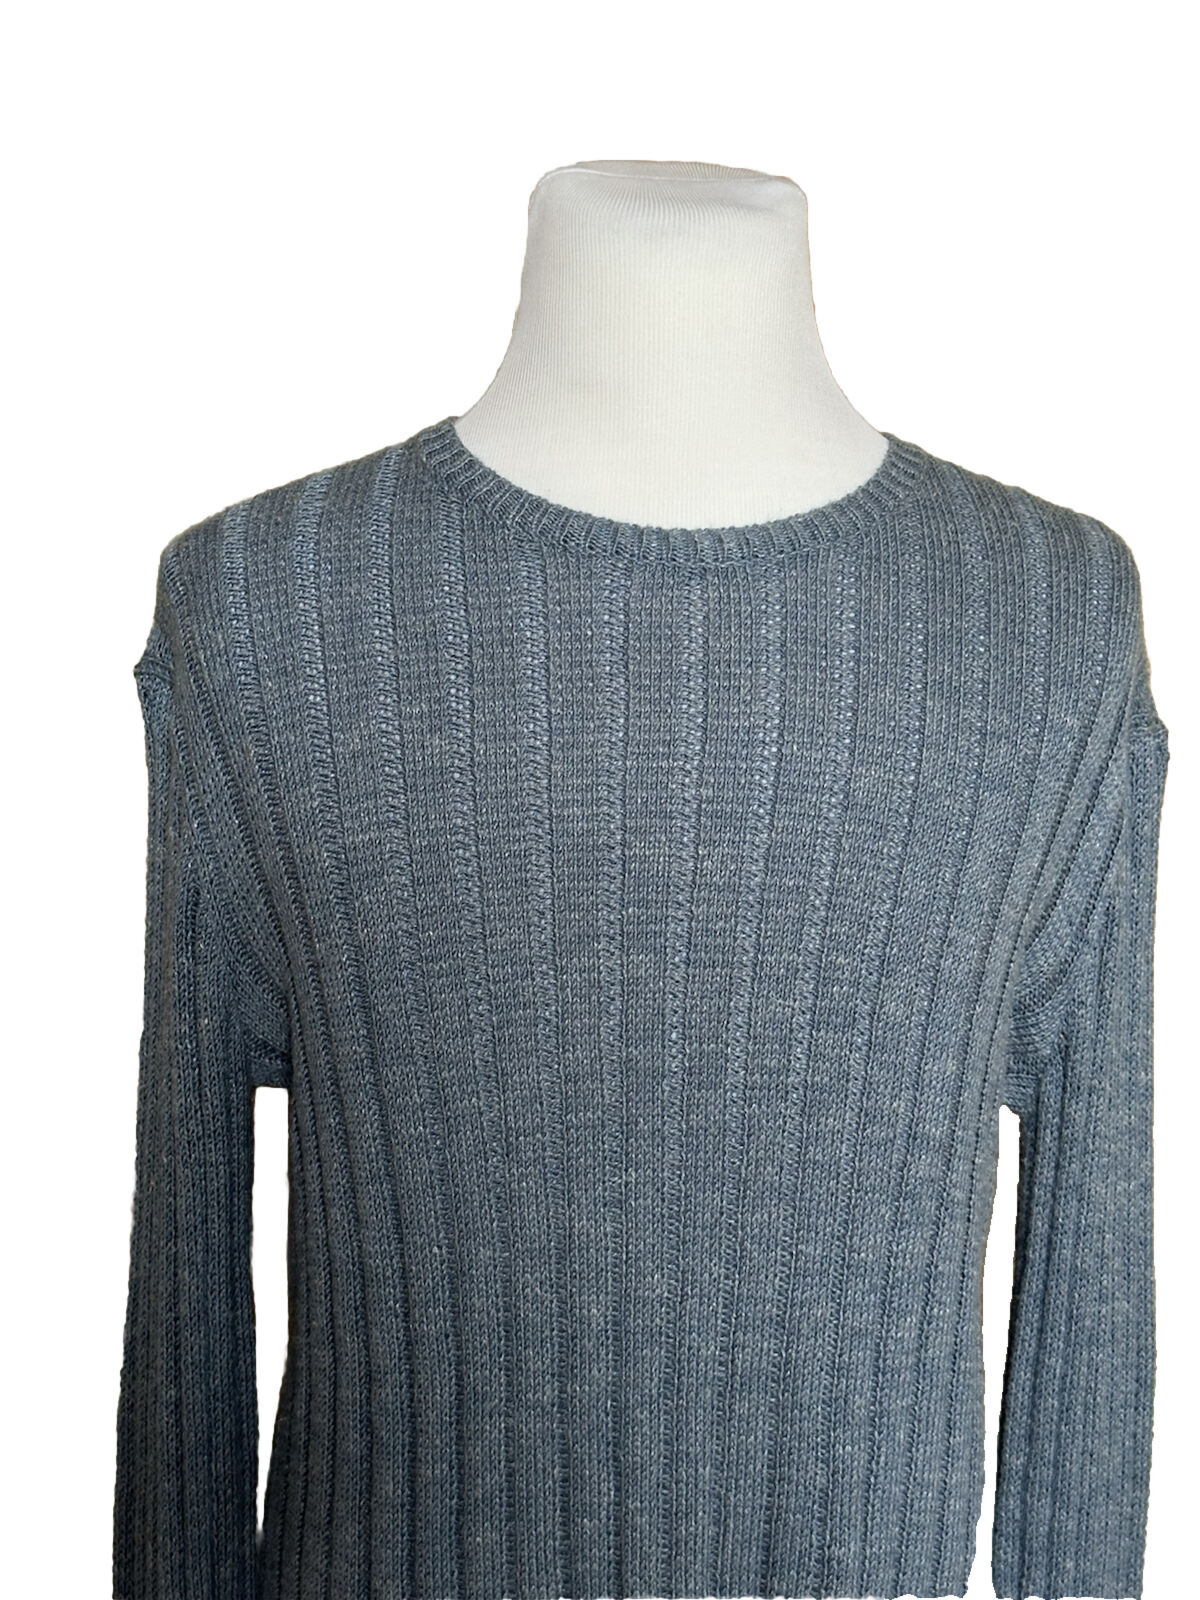 СЗТ $1095 Polo Ralph Lauren Purple Label Синий вязаный свитер из шелка/льна M 